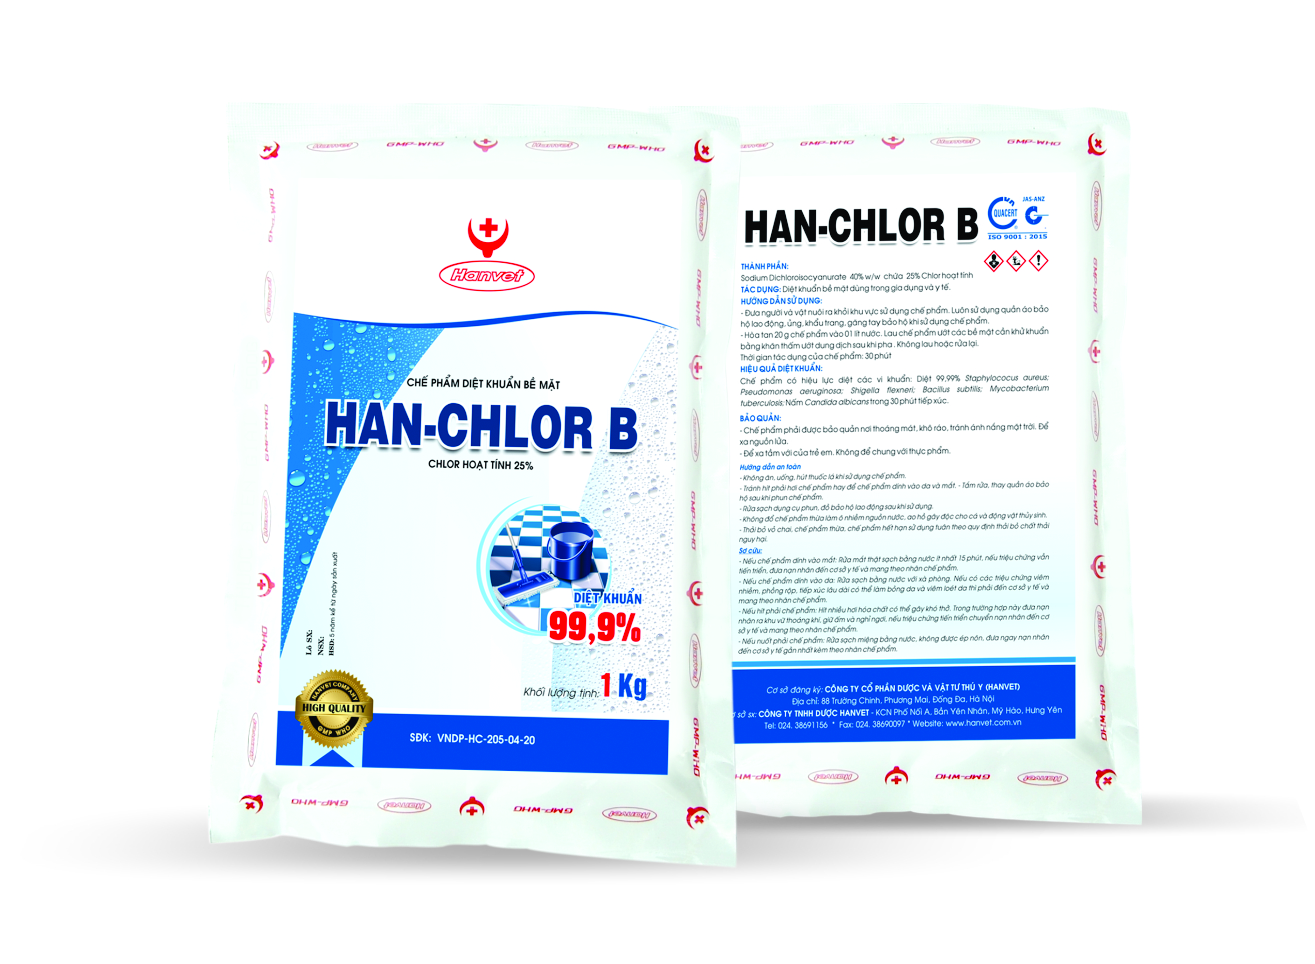 Han-Chlor B